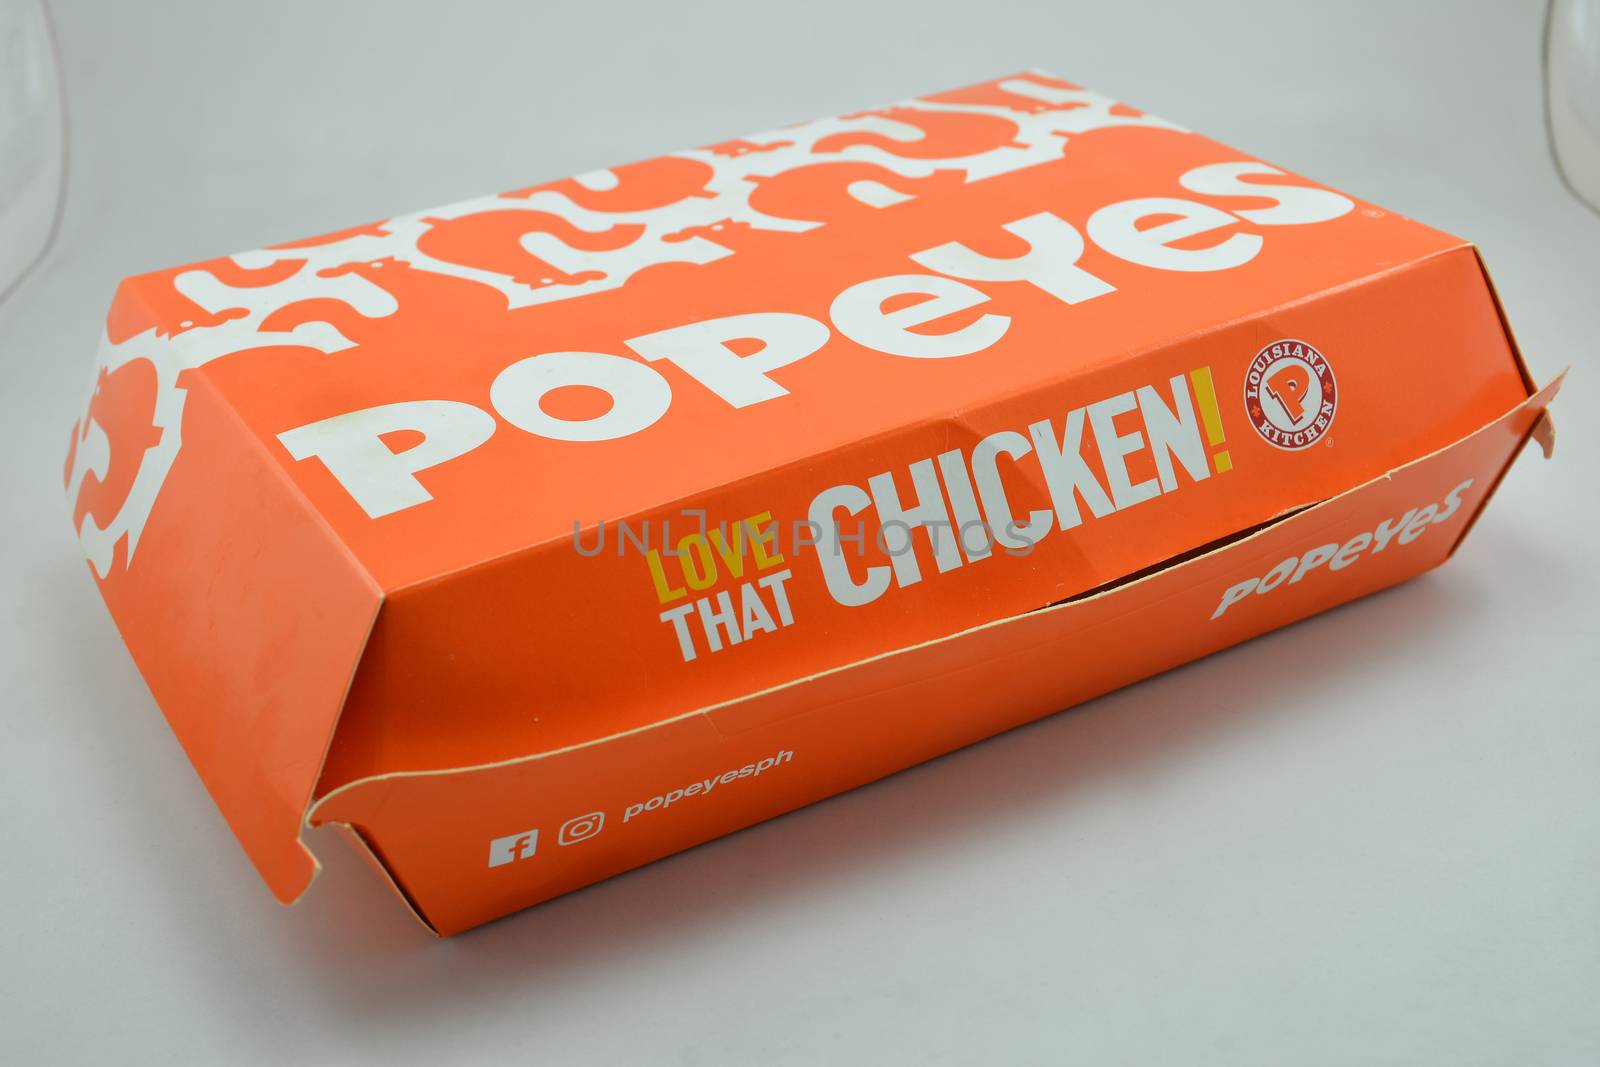 MANILA, PH - SEPT 10 - Popeyes chicken meal box on September 10, 2020 in Manila, Philippines.